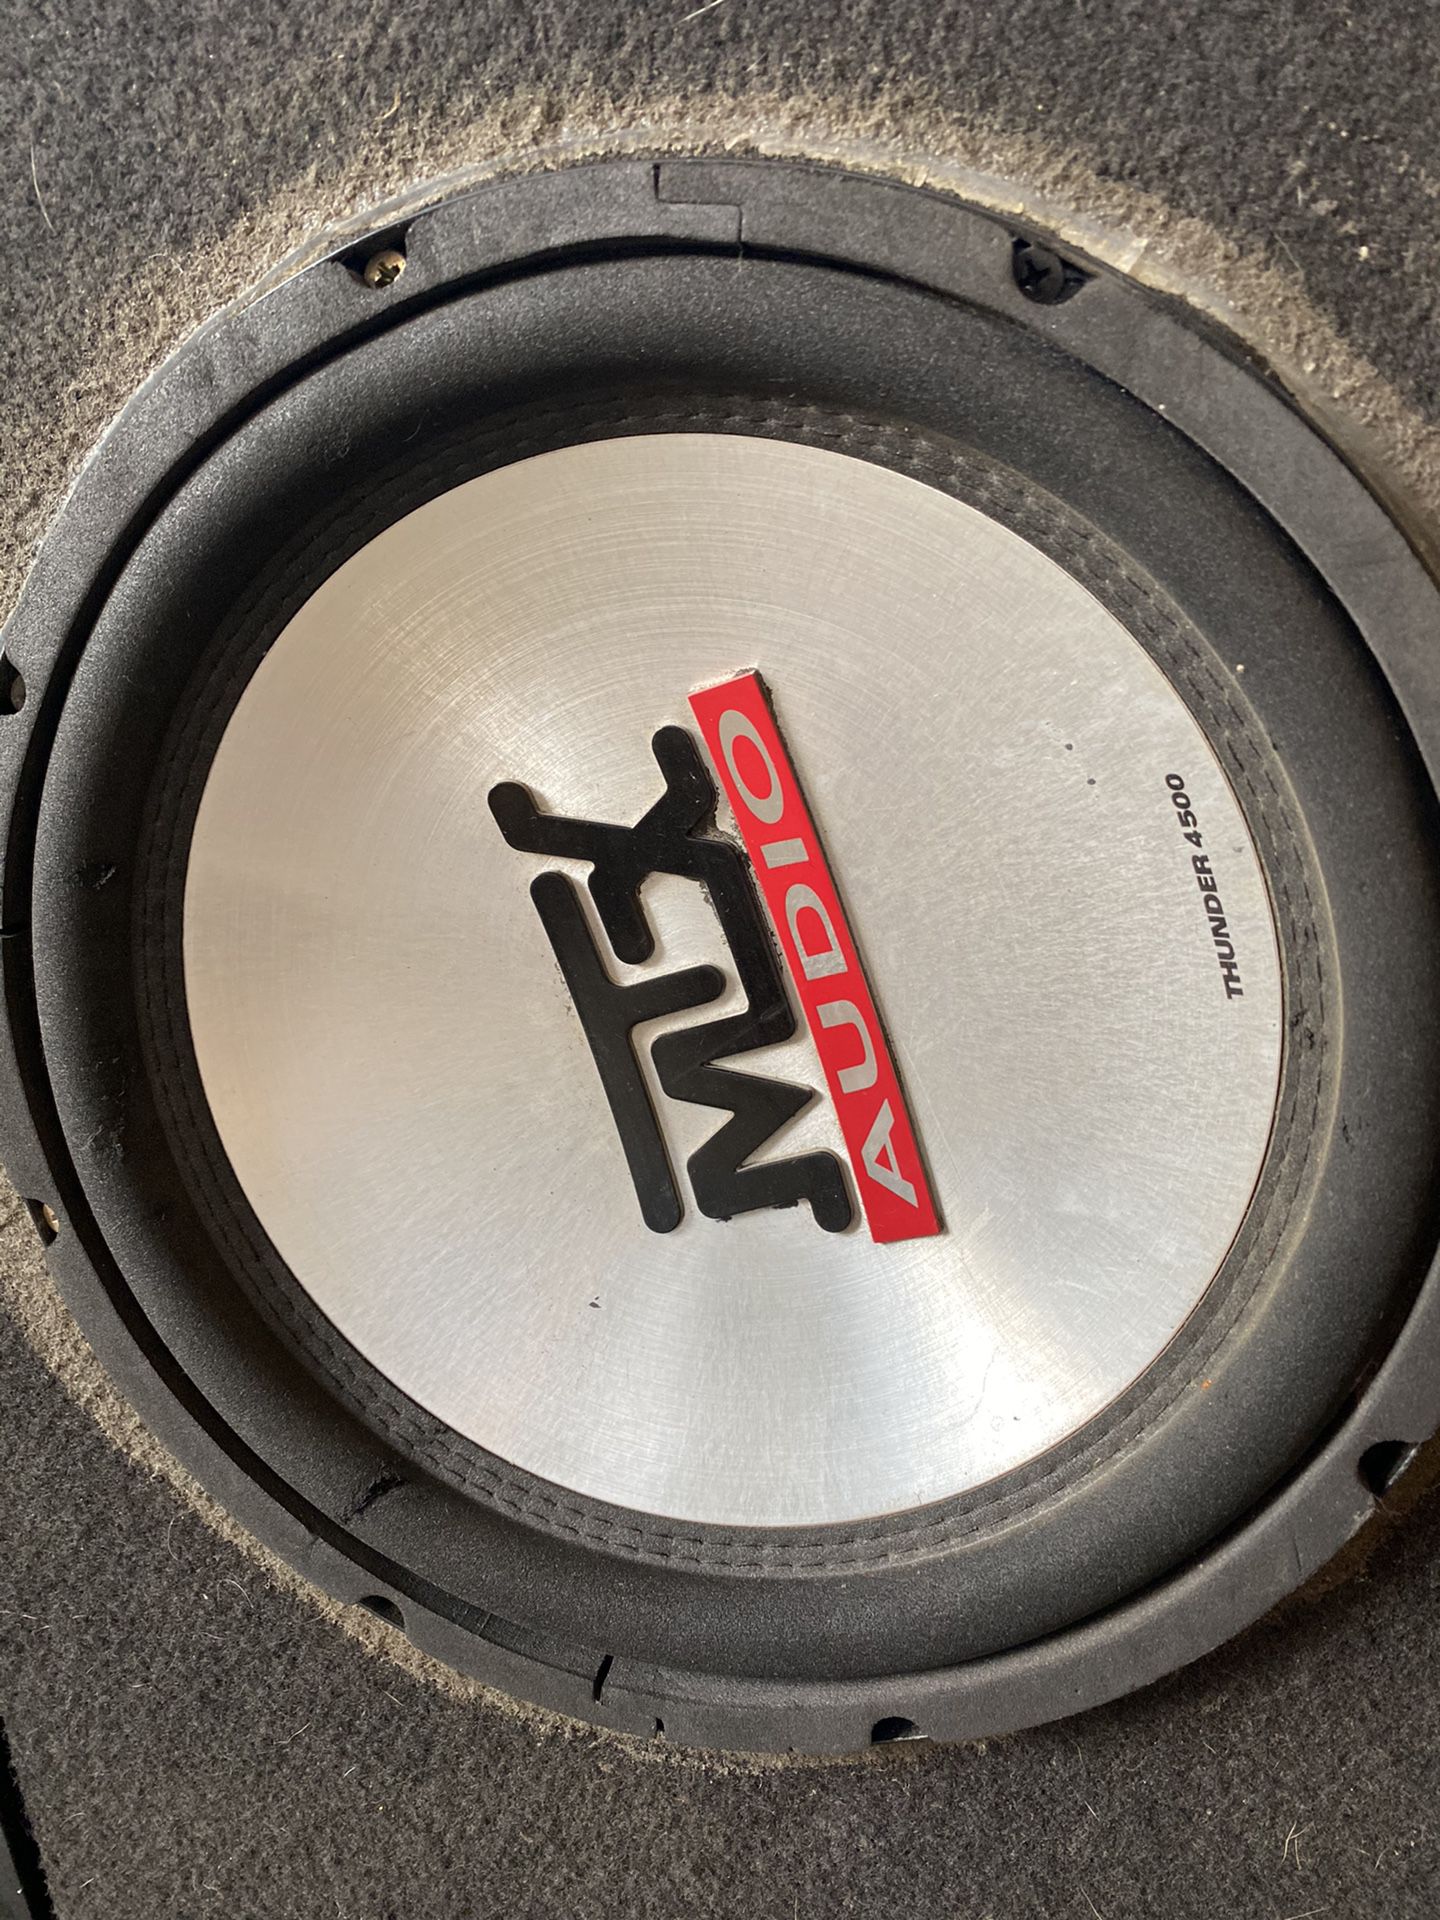 Mtx audio speakers and amp